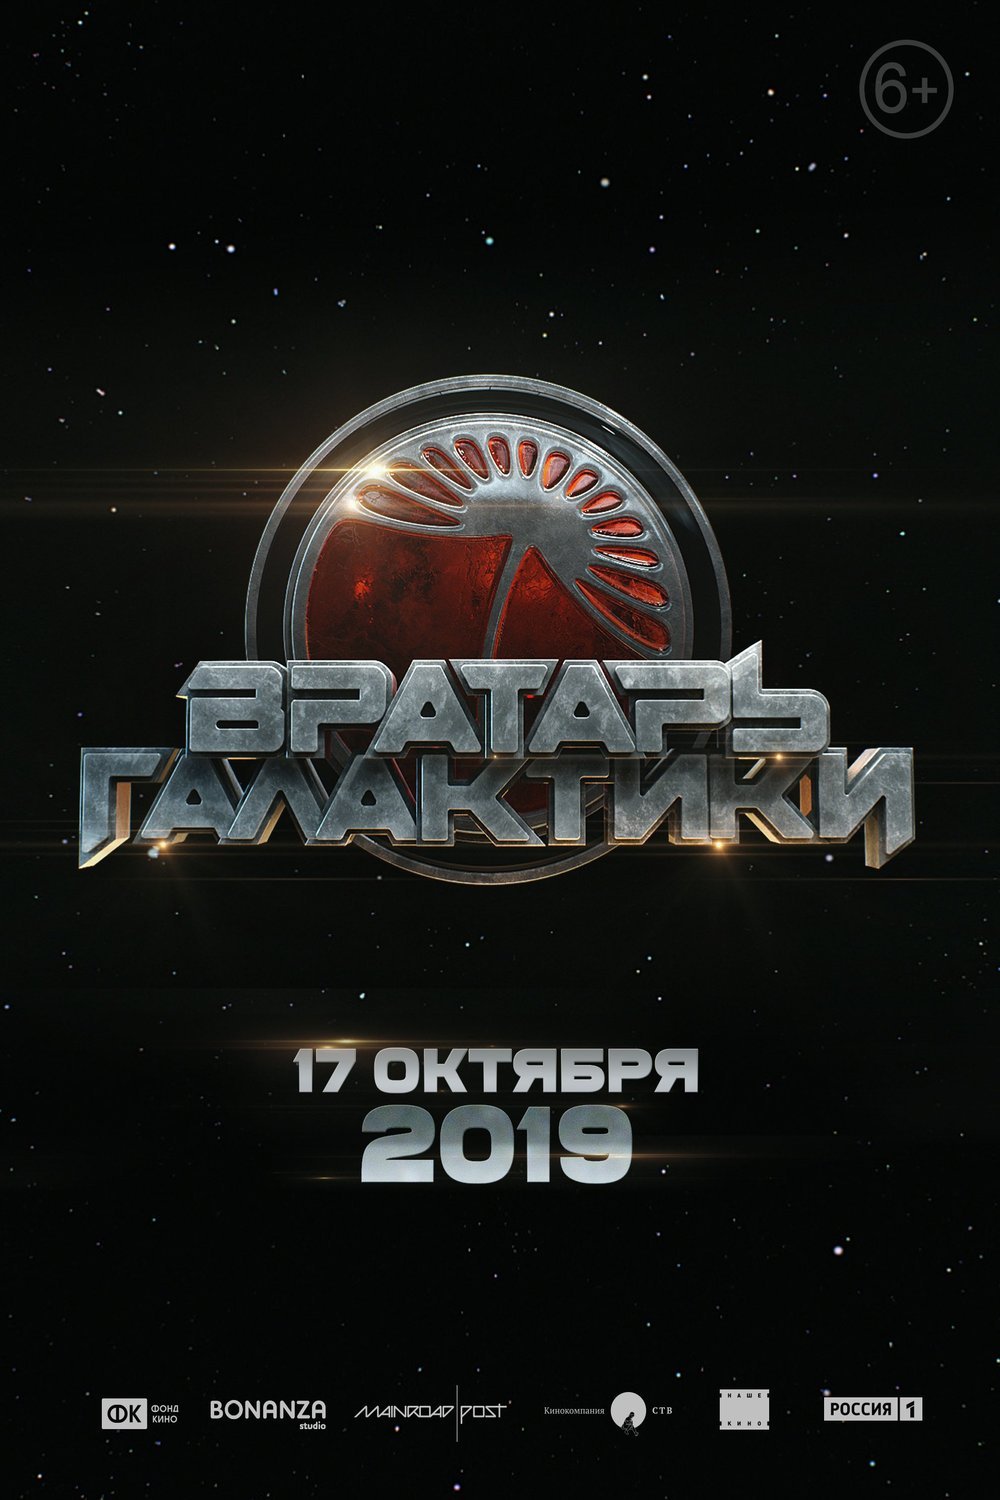 L'affiche originale du film Vratar galaktiki en russe